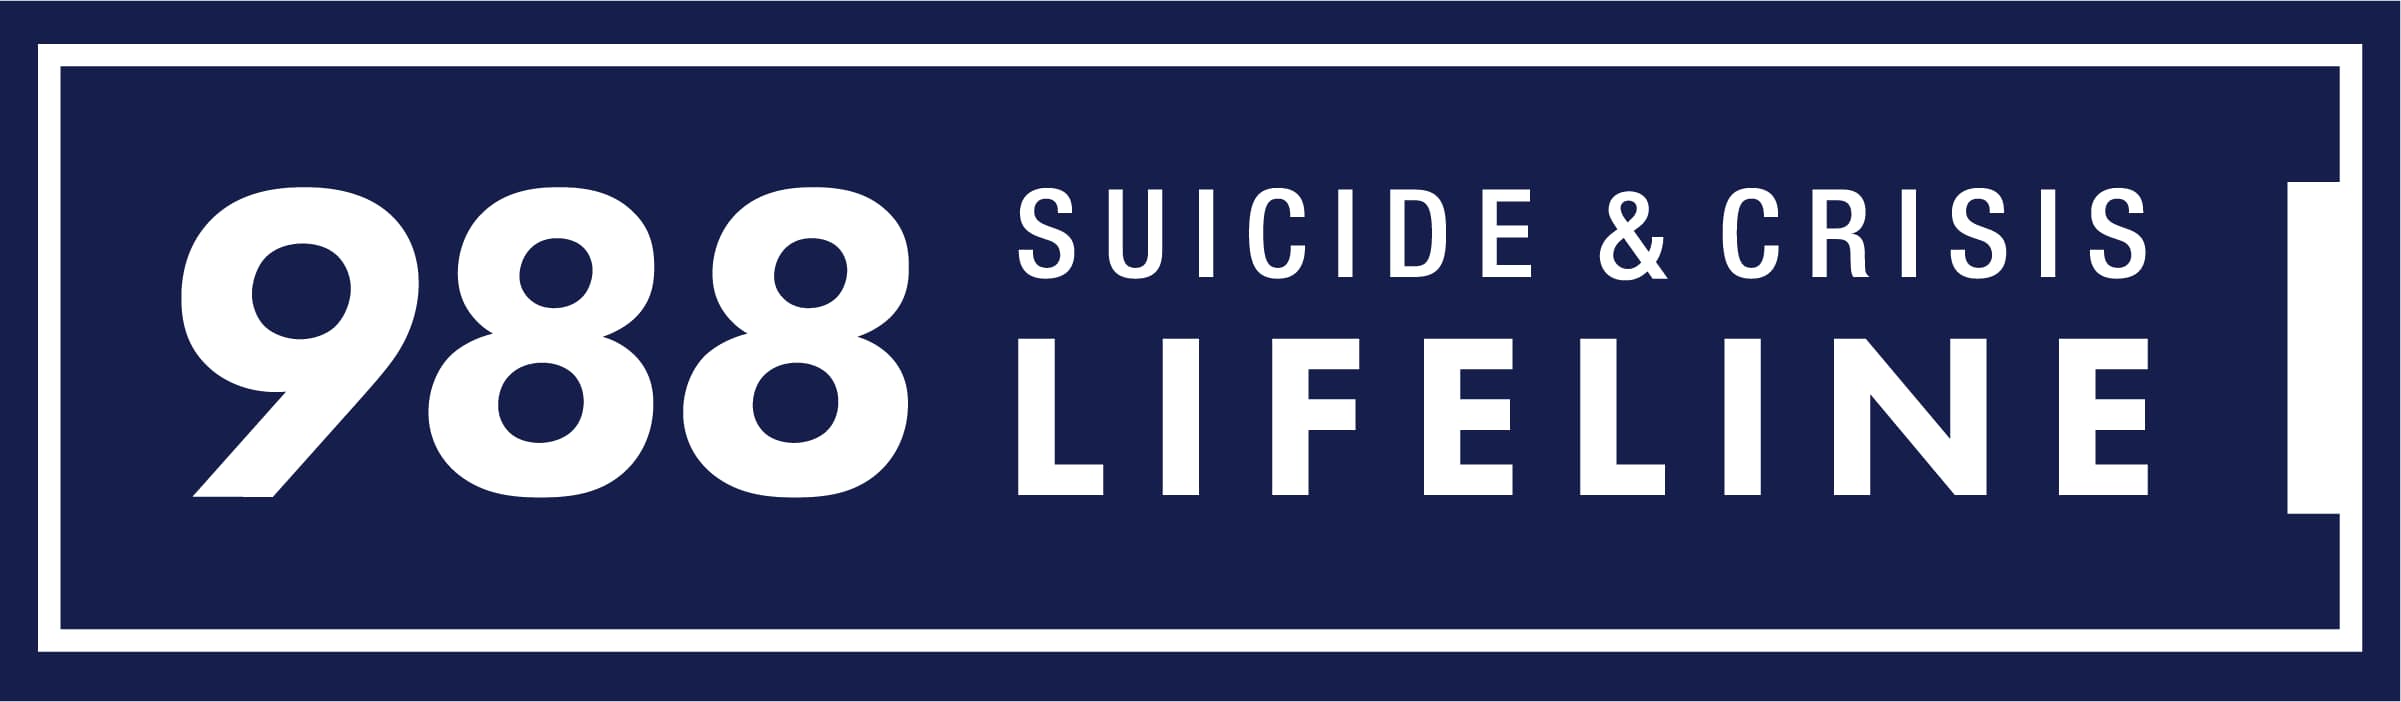 988_horizontal_navy - Suicide Prevention Hotline